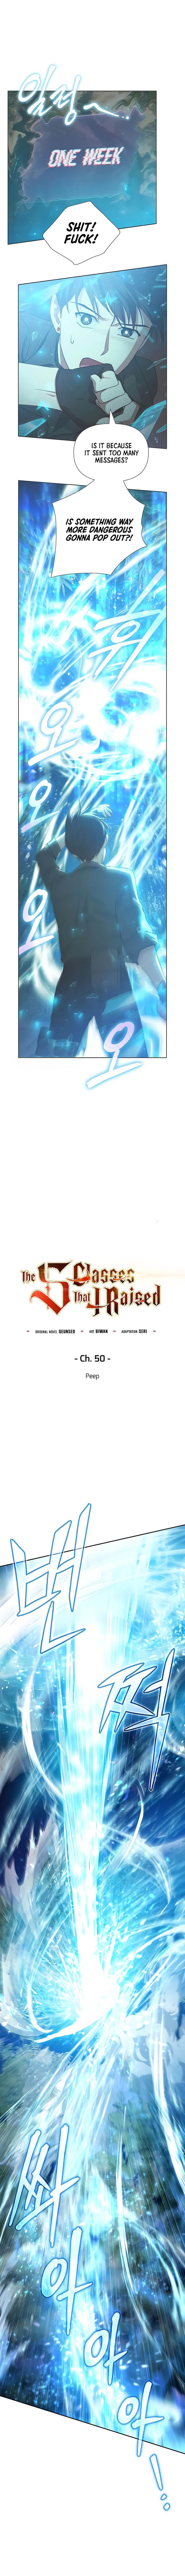 the_s_classes_that_i_raised_50_1